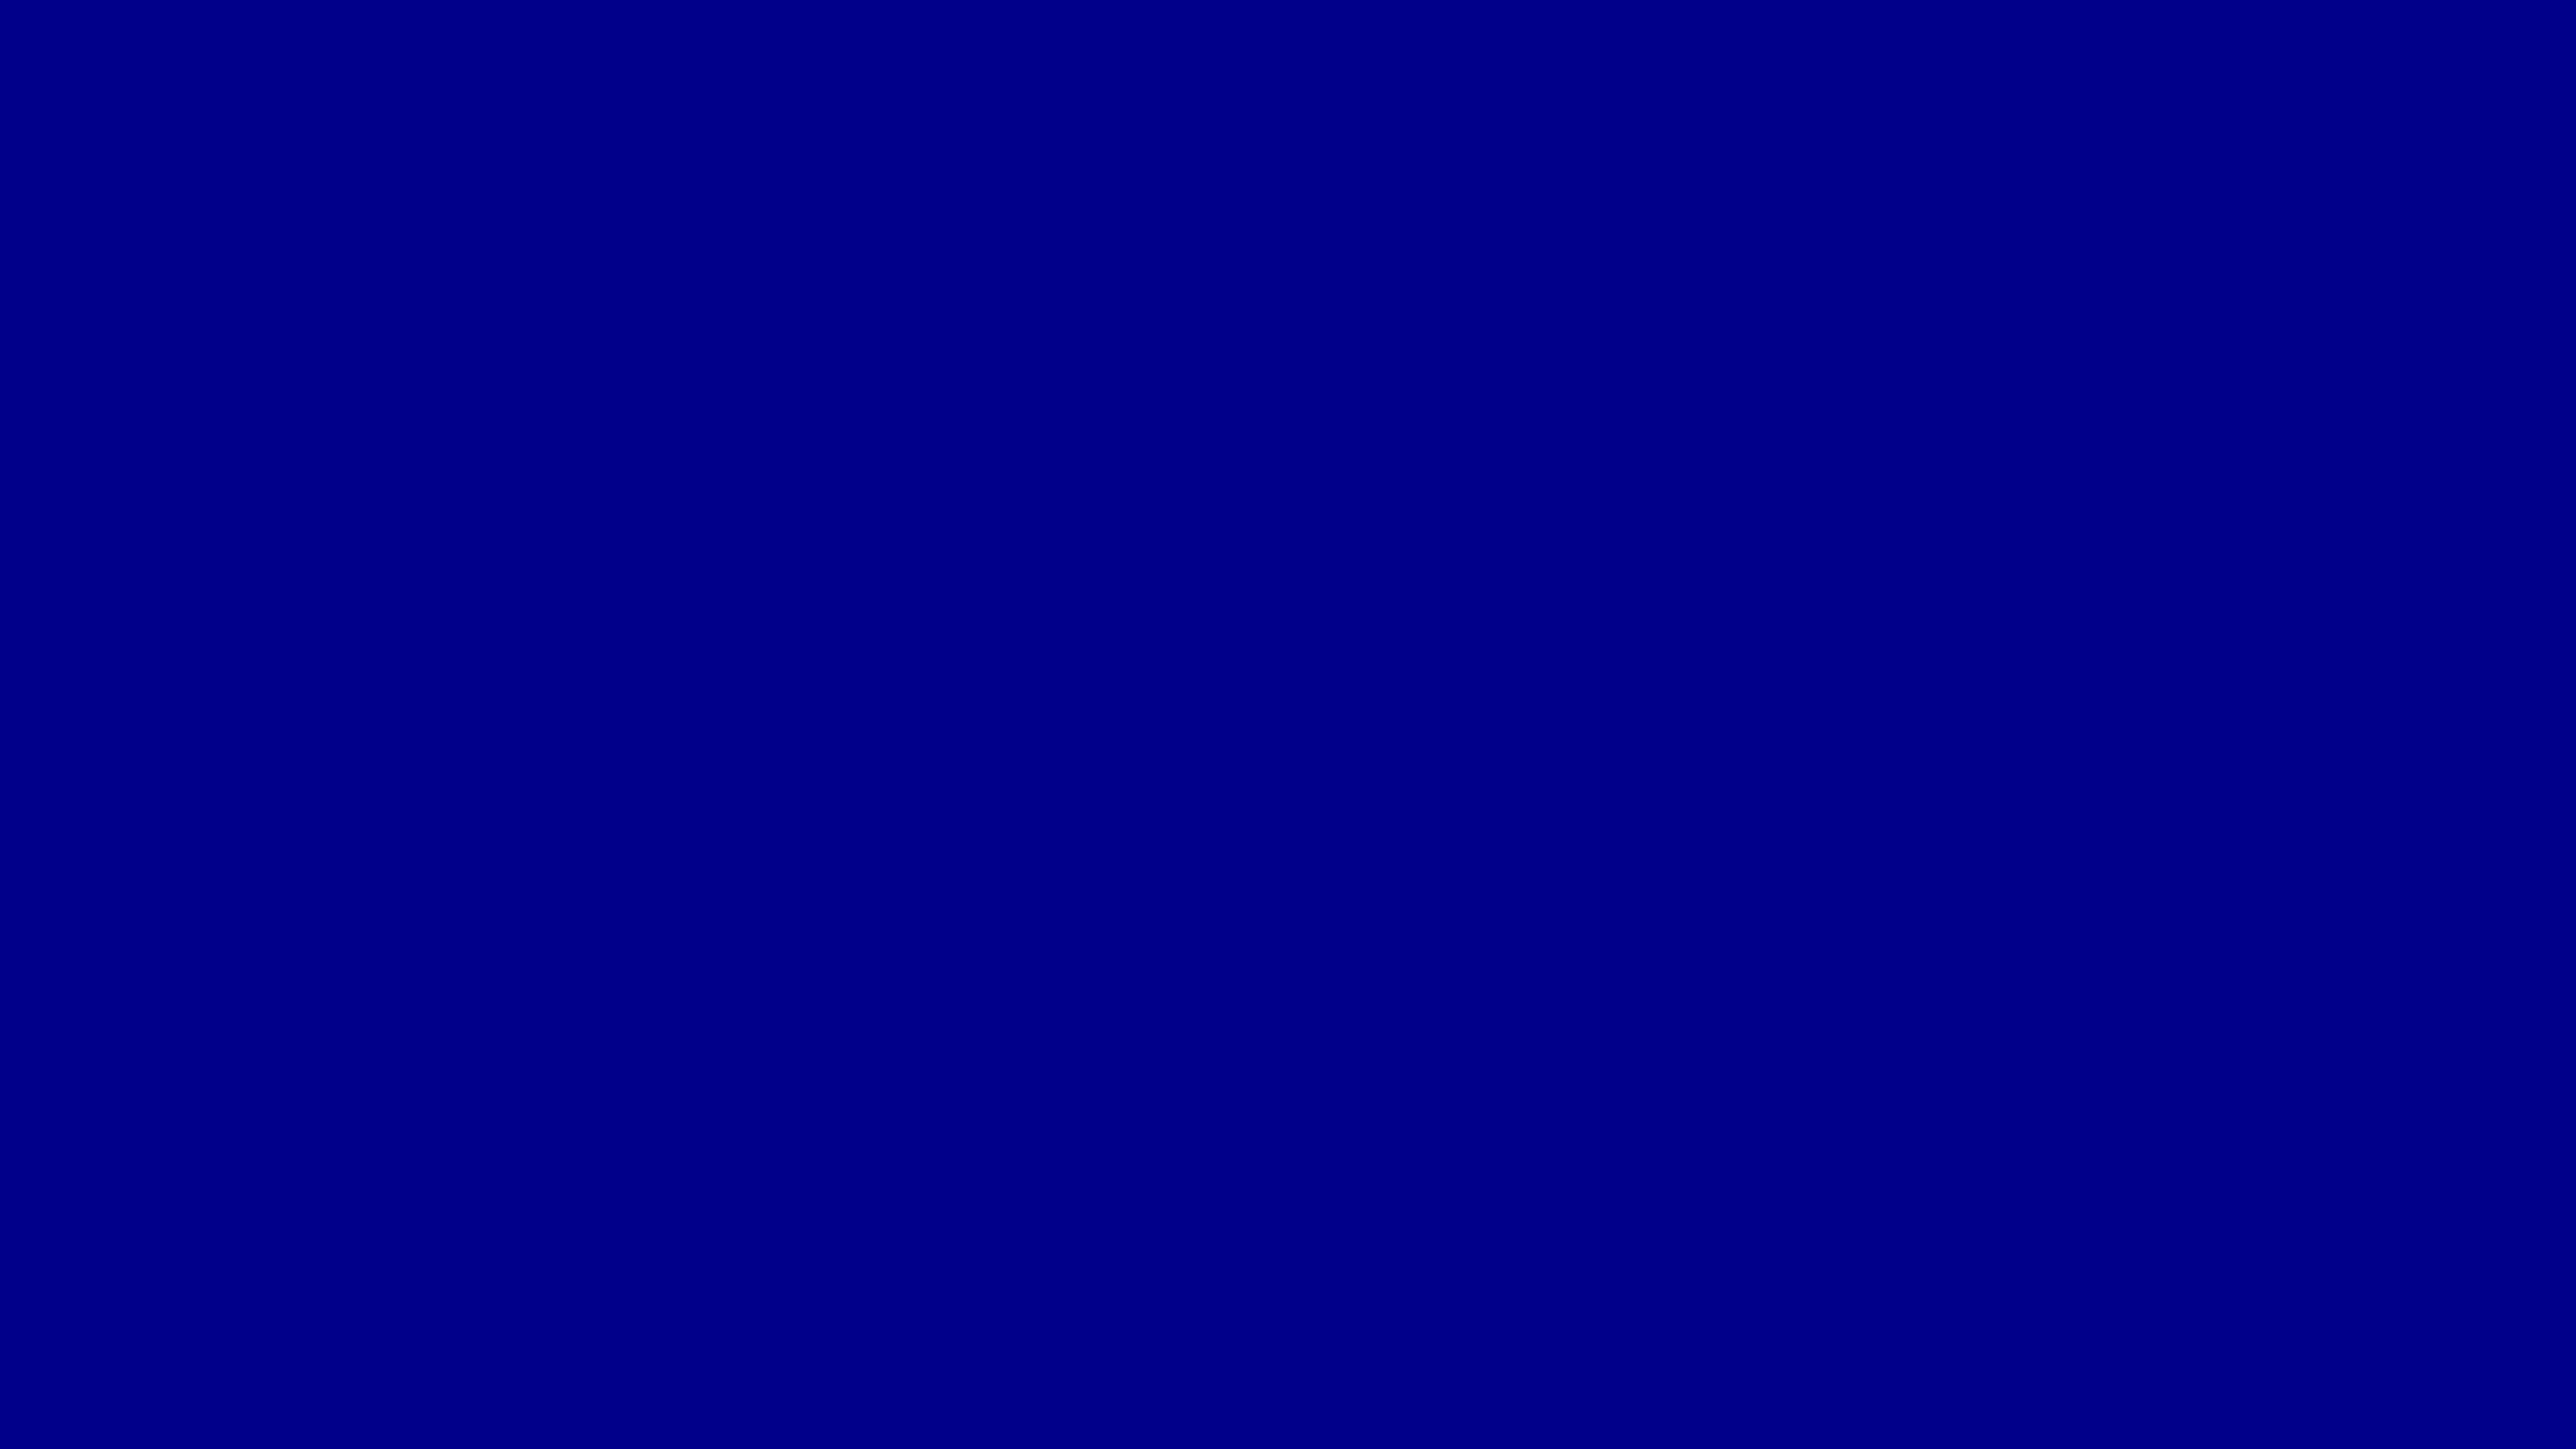 3840x2160 Dark Blue Solid Color Background